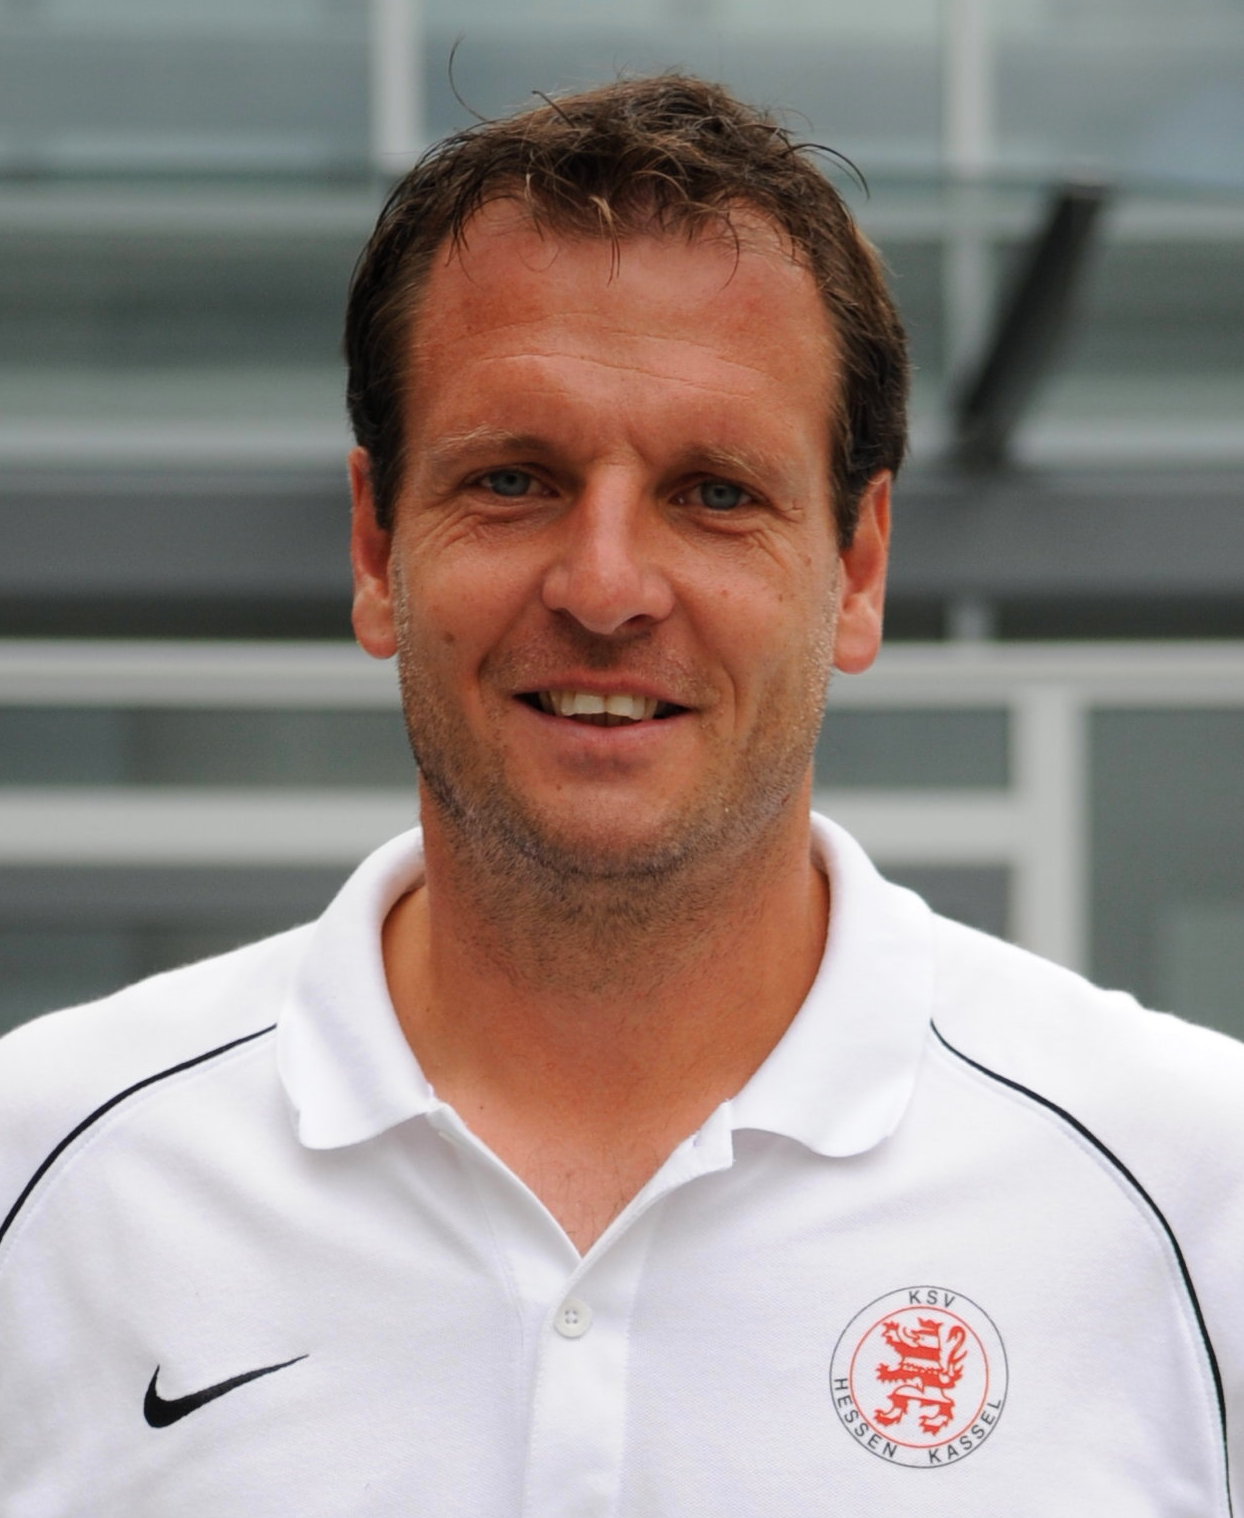 Portrait Mirko Dickhaut (Trainer)
KSV Hessen Kassel